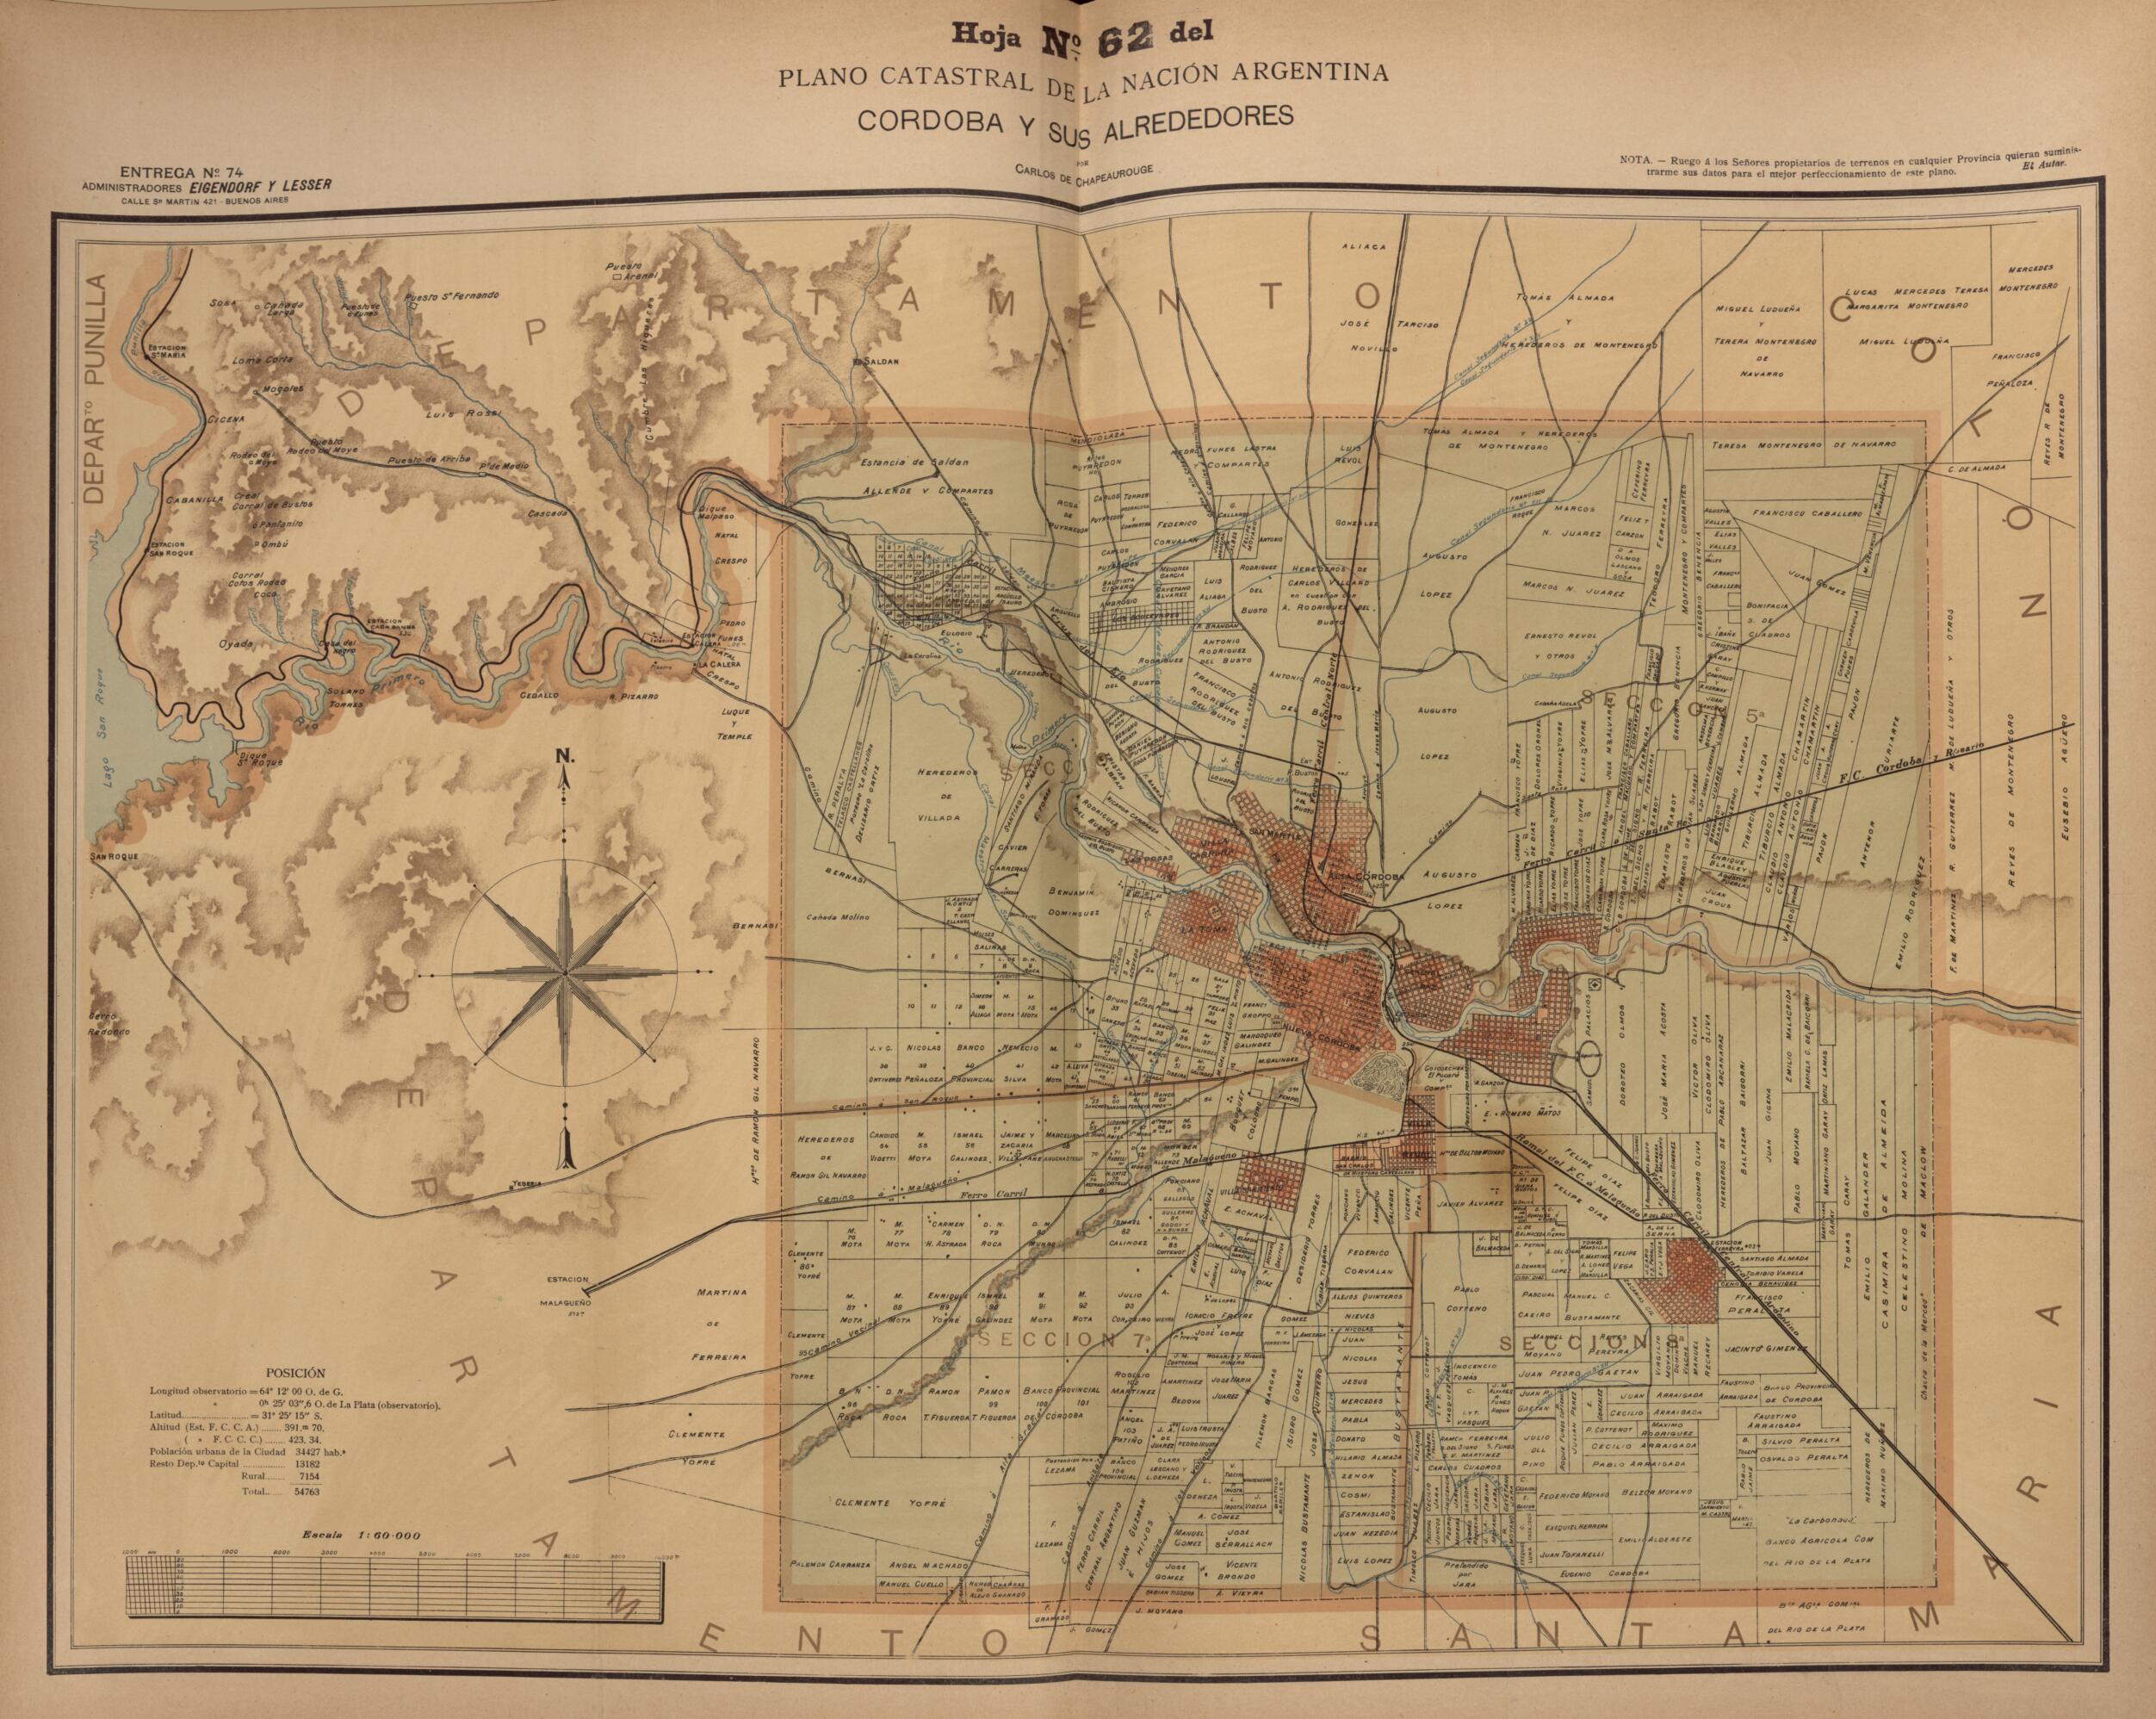 This old map of Plano Catastral De La Nacion Hoja No. 62 from República Argentina from 1905 was created by Carlos De Chapeaurouge in 1905